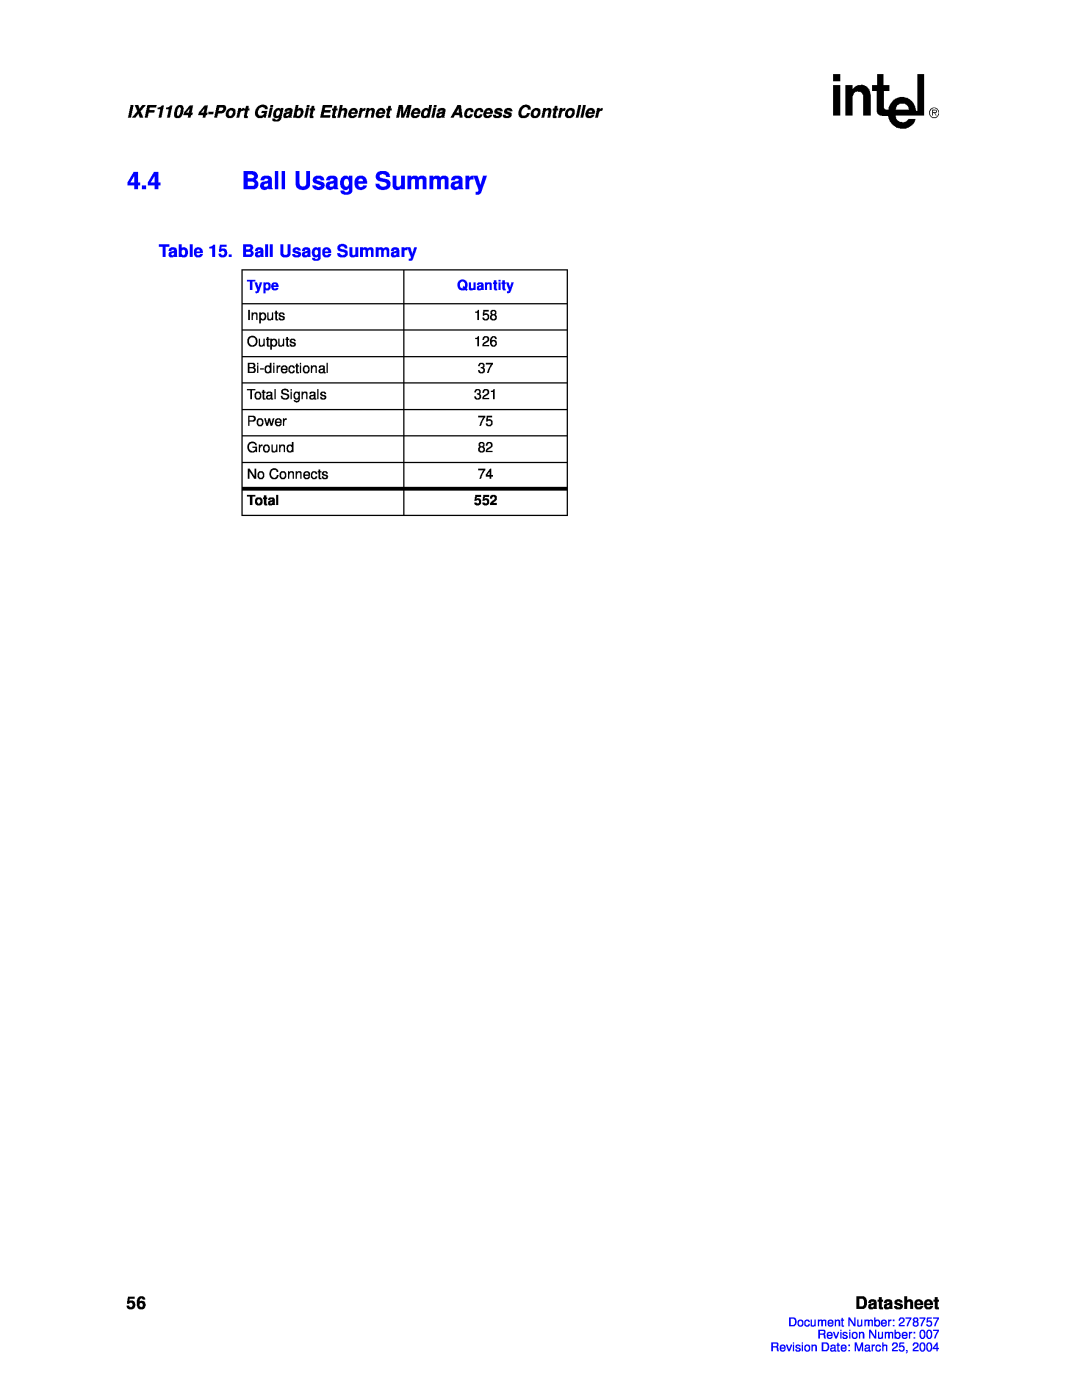 Intel IXF1104 manual 4.4Ball Usage Summary, Datasheet, Total 